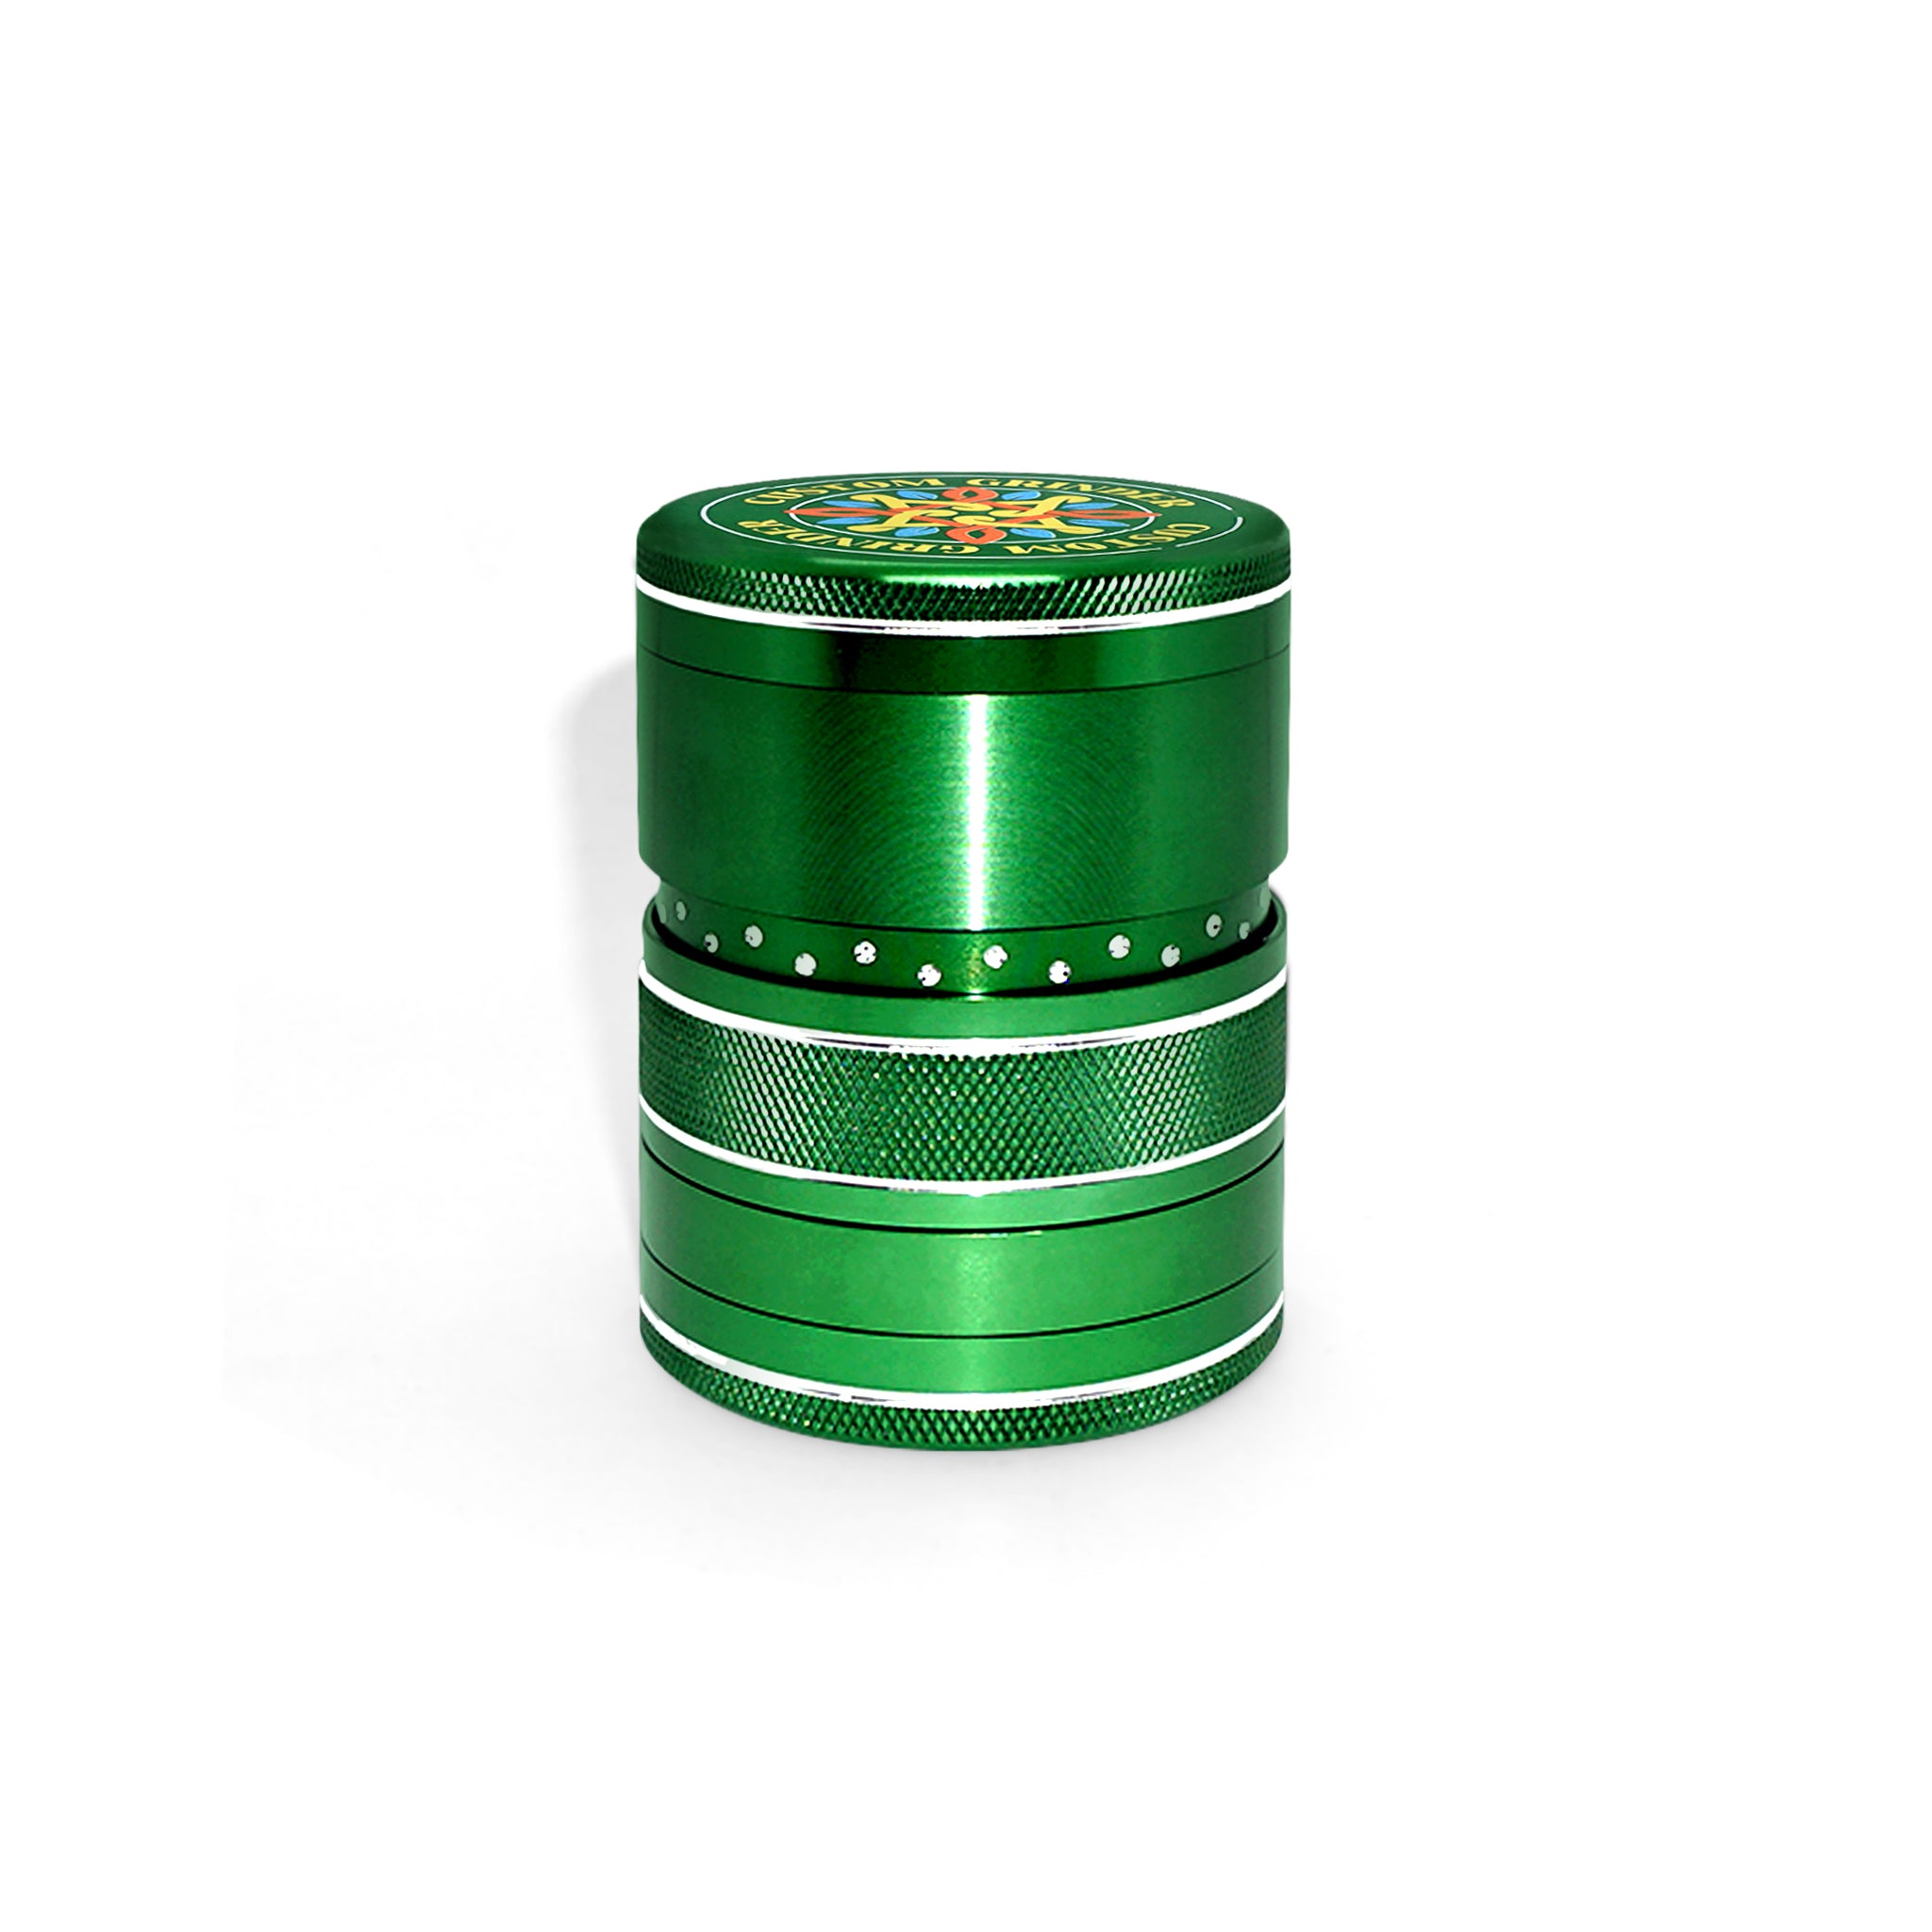 Custom Round Green Grinder (63MM*85MM)